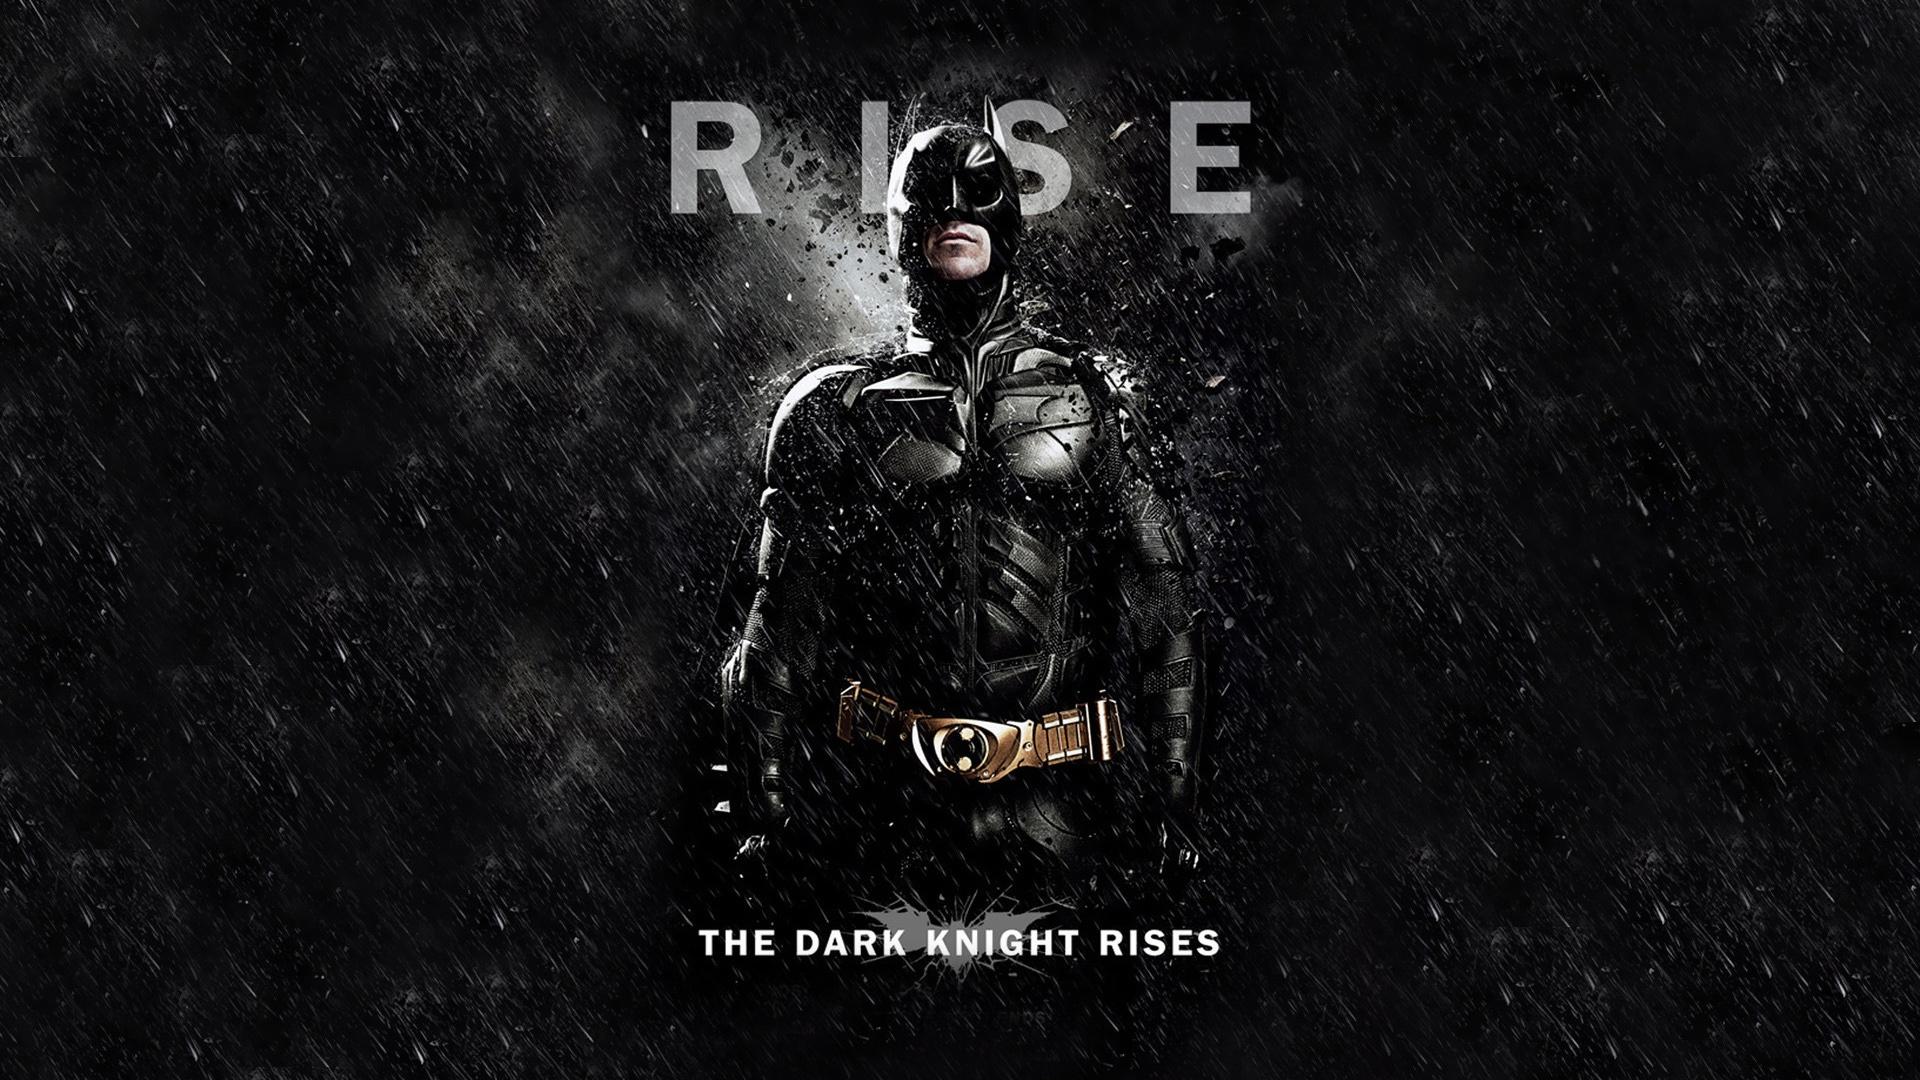 Batman The Dark Knight Rises Wallpaper in jpg format